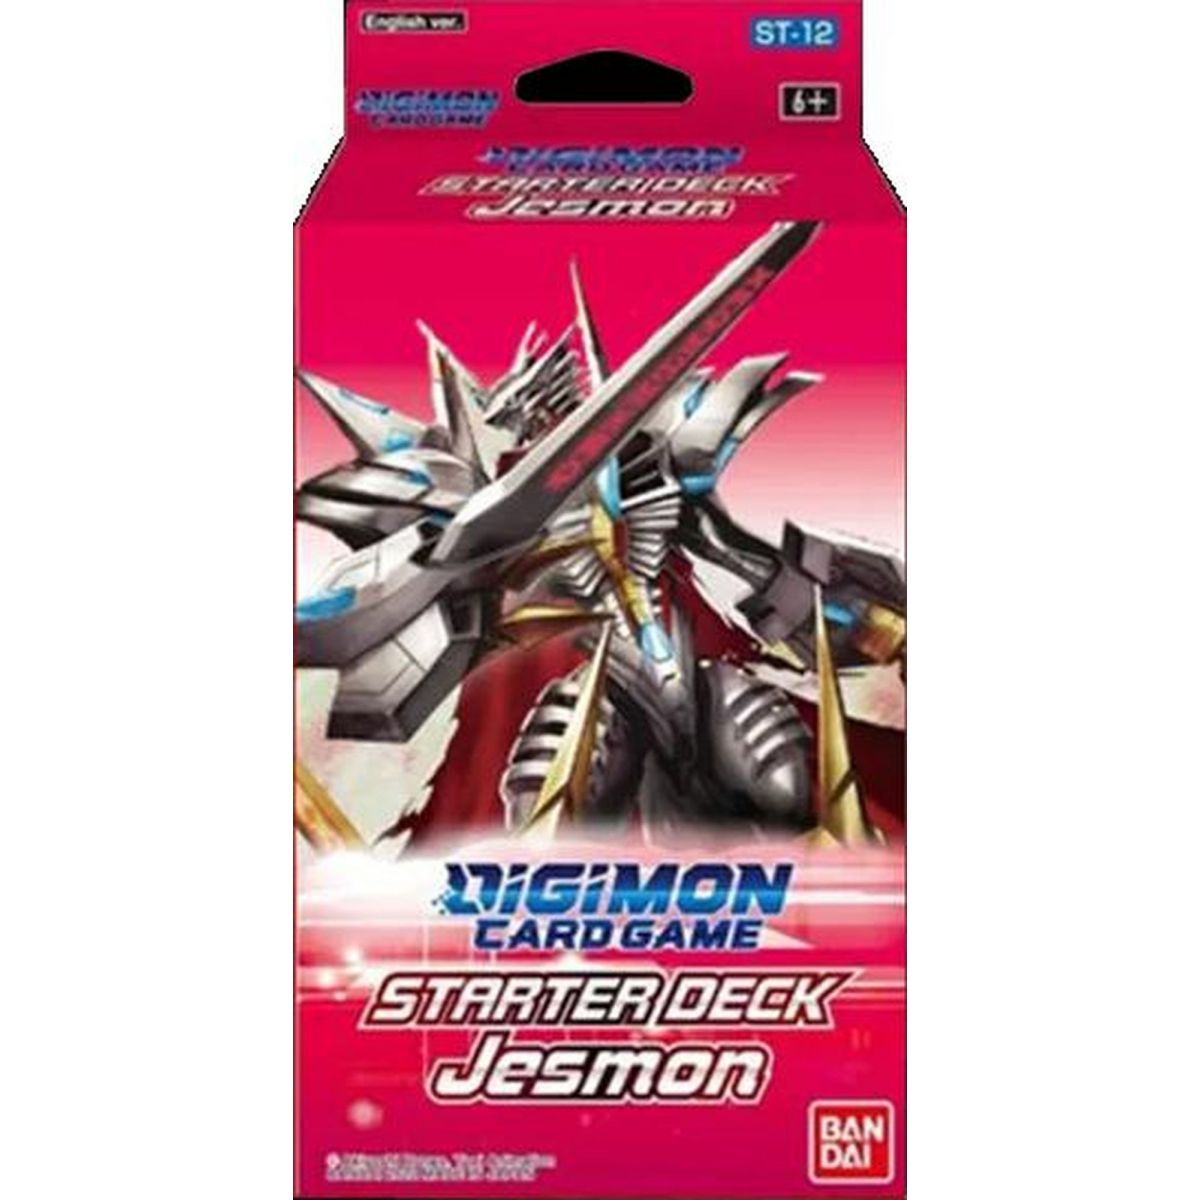 Digimon-Kartenspiel – Starterdeck – Jesmon [ST12] – DE